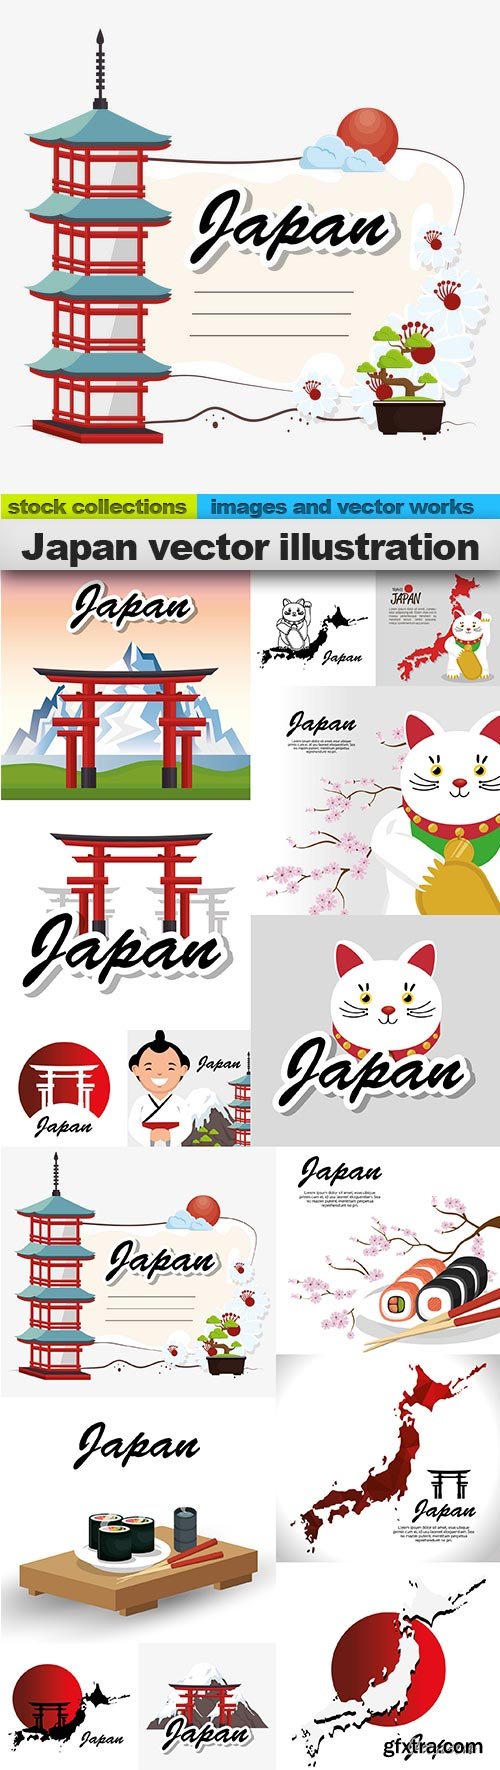 Japan vector illustration, 15 x EPS